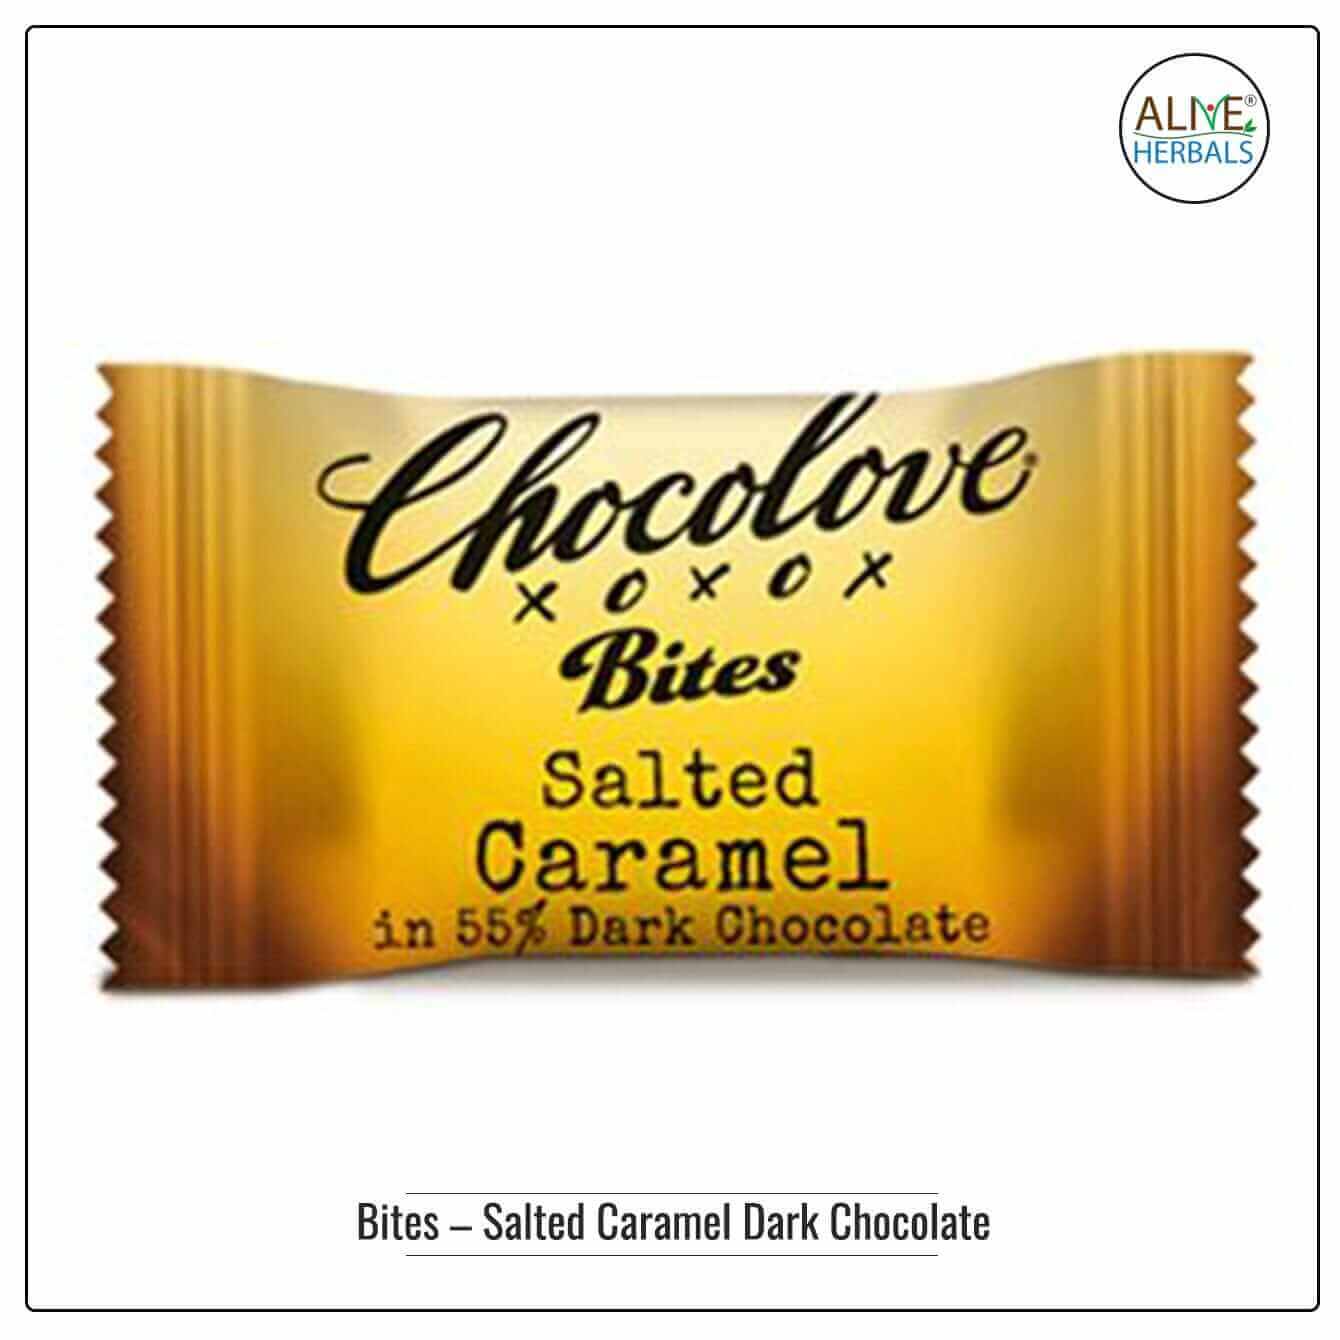 Bites – Salted Caramel Dark Chocolate - Buy at Natural Food Store | Alive Herbals.